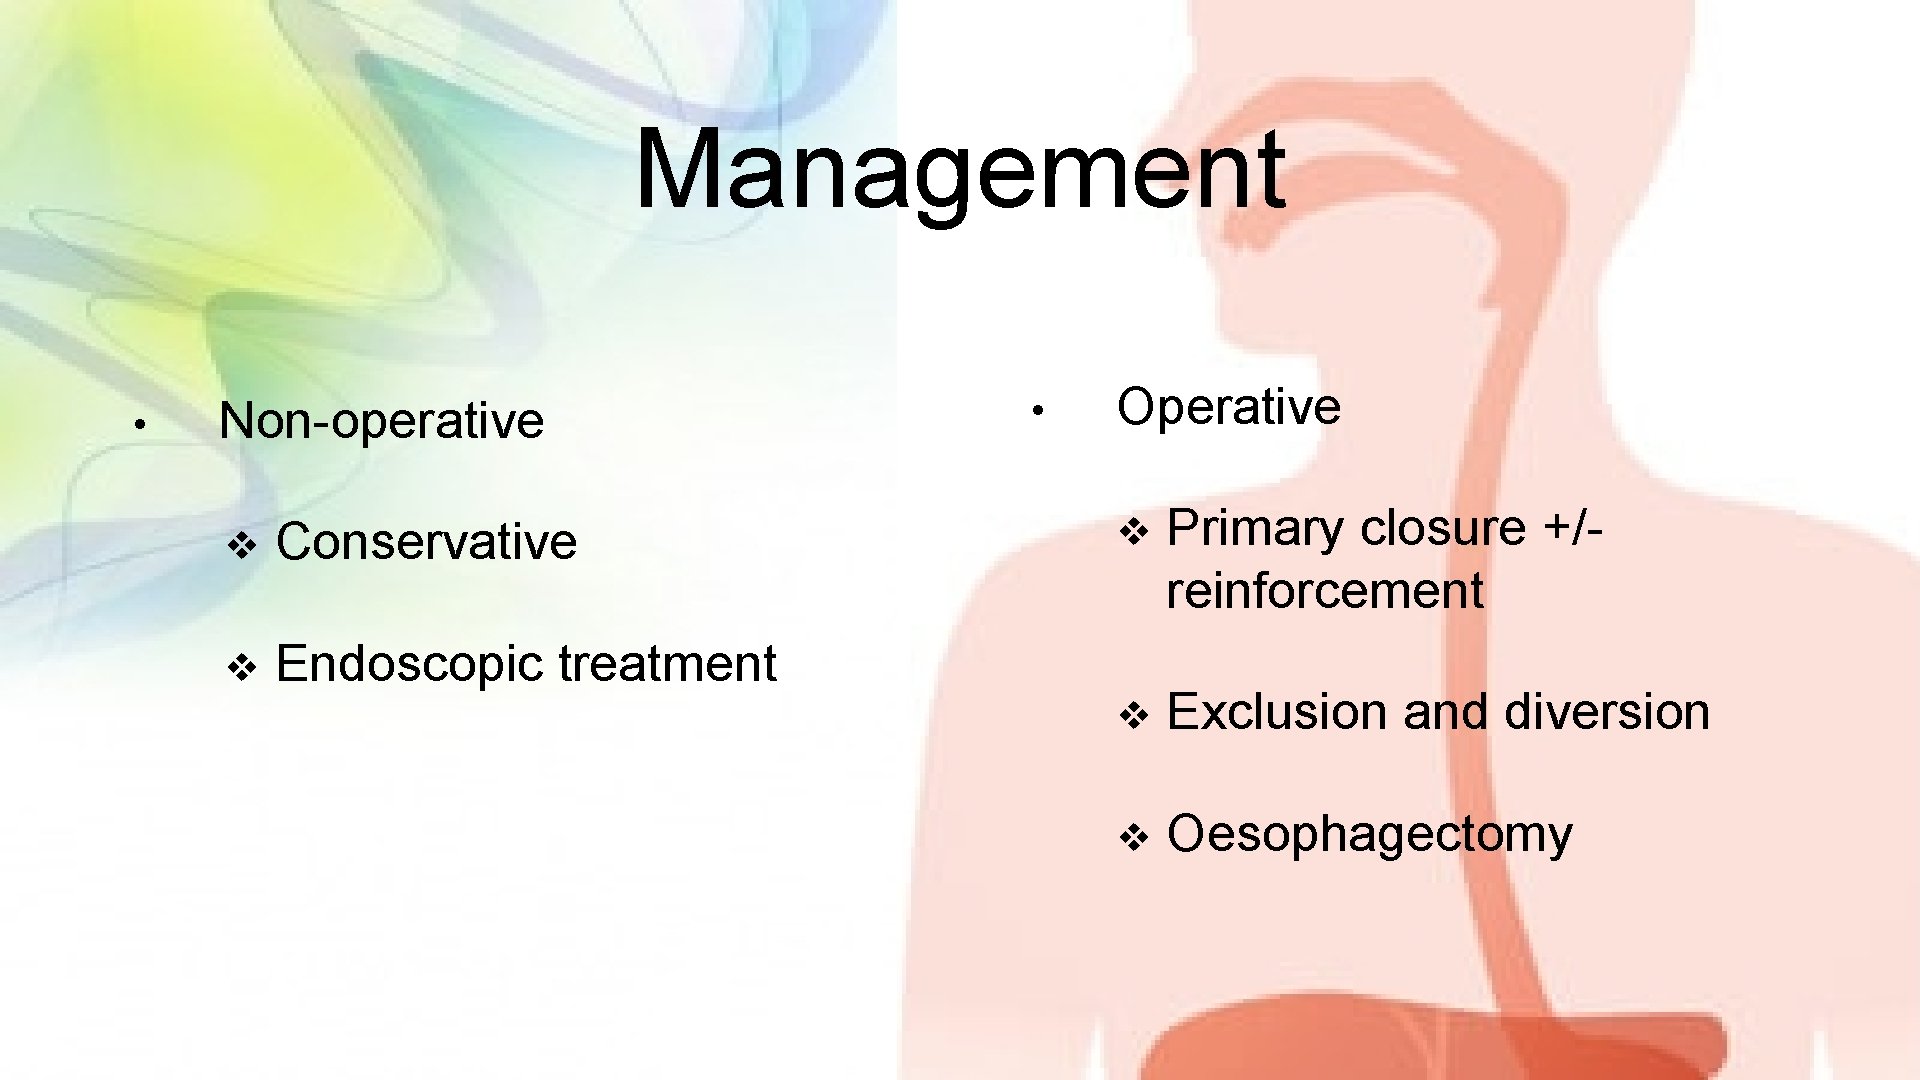 Management • Non-operative v Conservative v Endoscopic treatment • Operative v Primary closure +/reinforcement